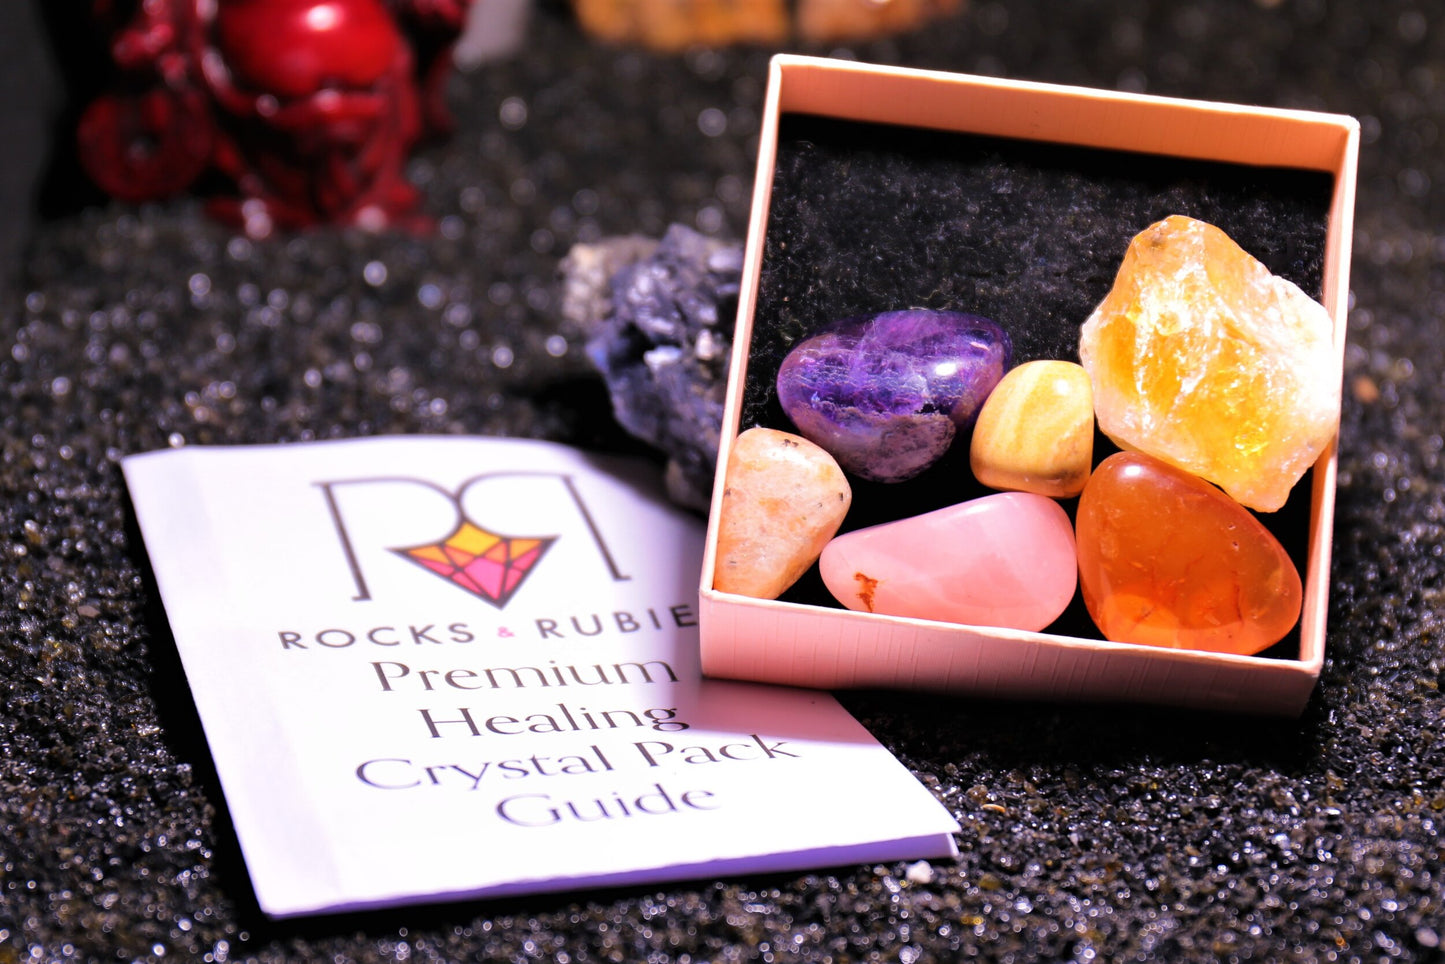 Positive Change Premium Healing Crystal Pack